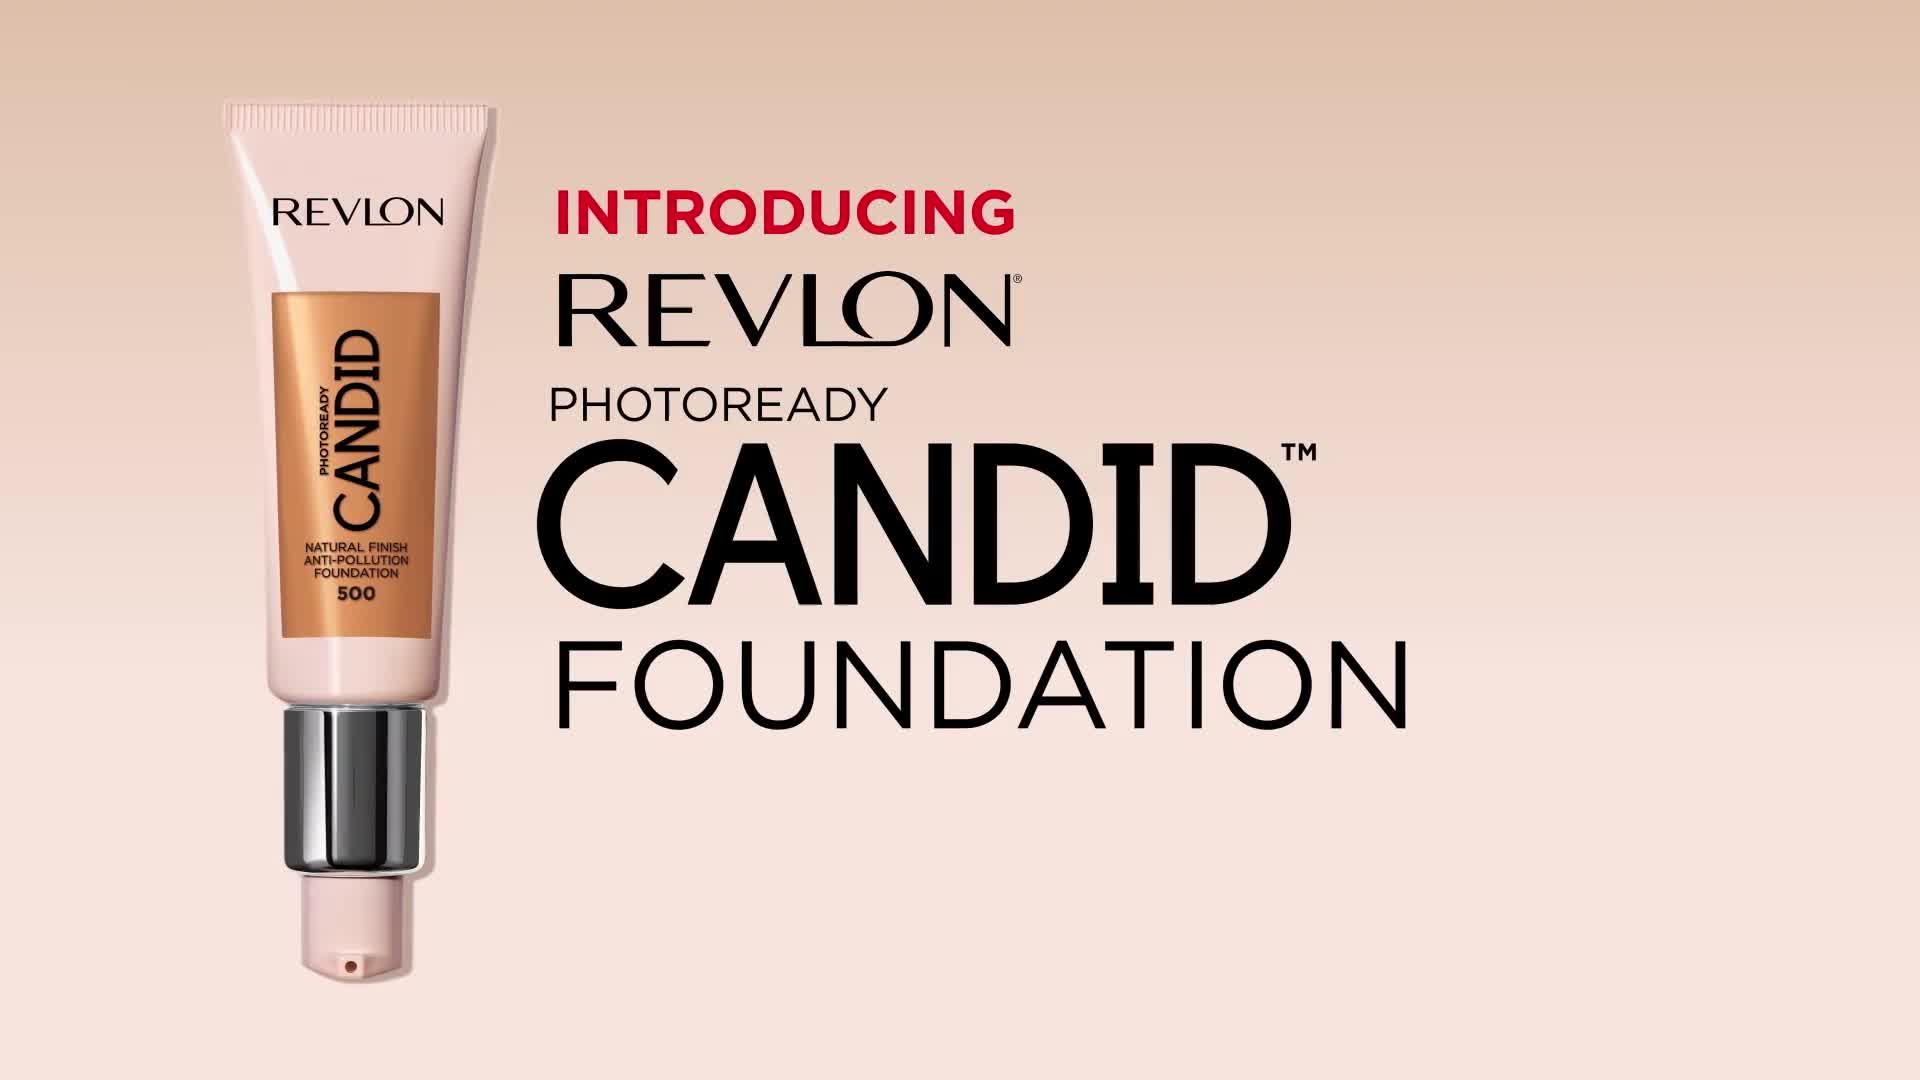 PhotoReady Candid™ Natural Finish Anti-Pollution Foundation - Revlon